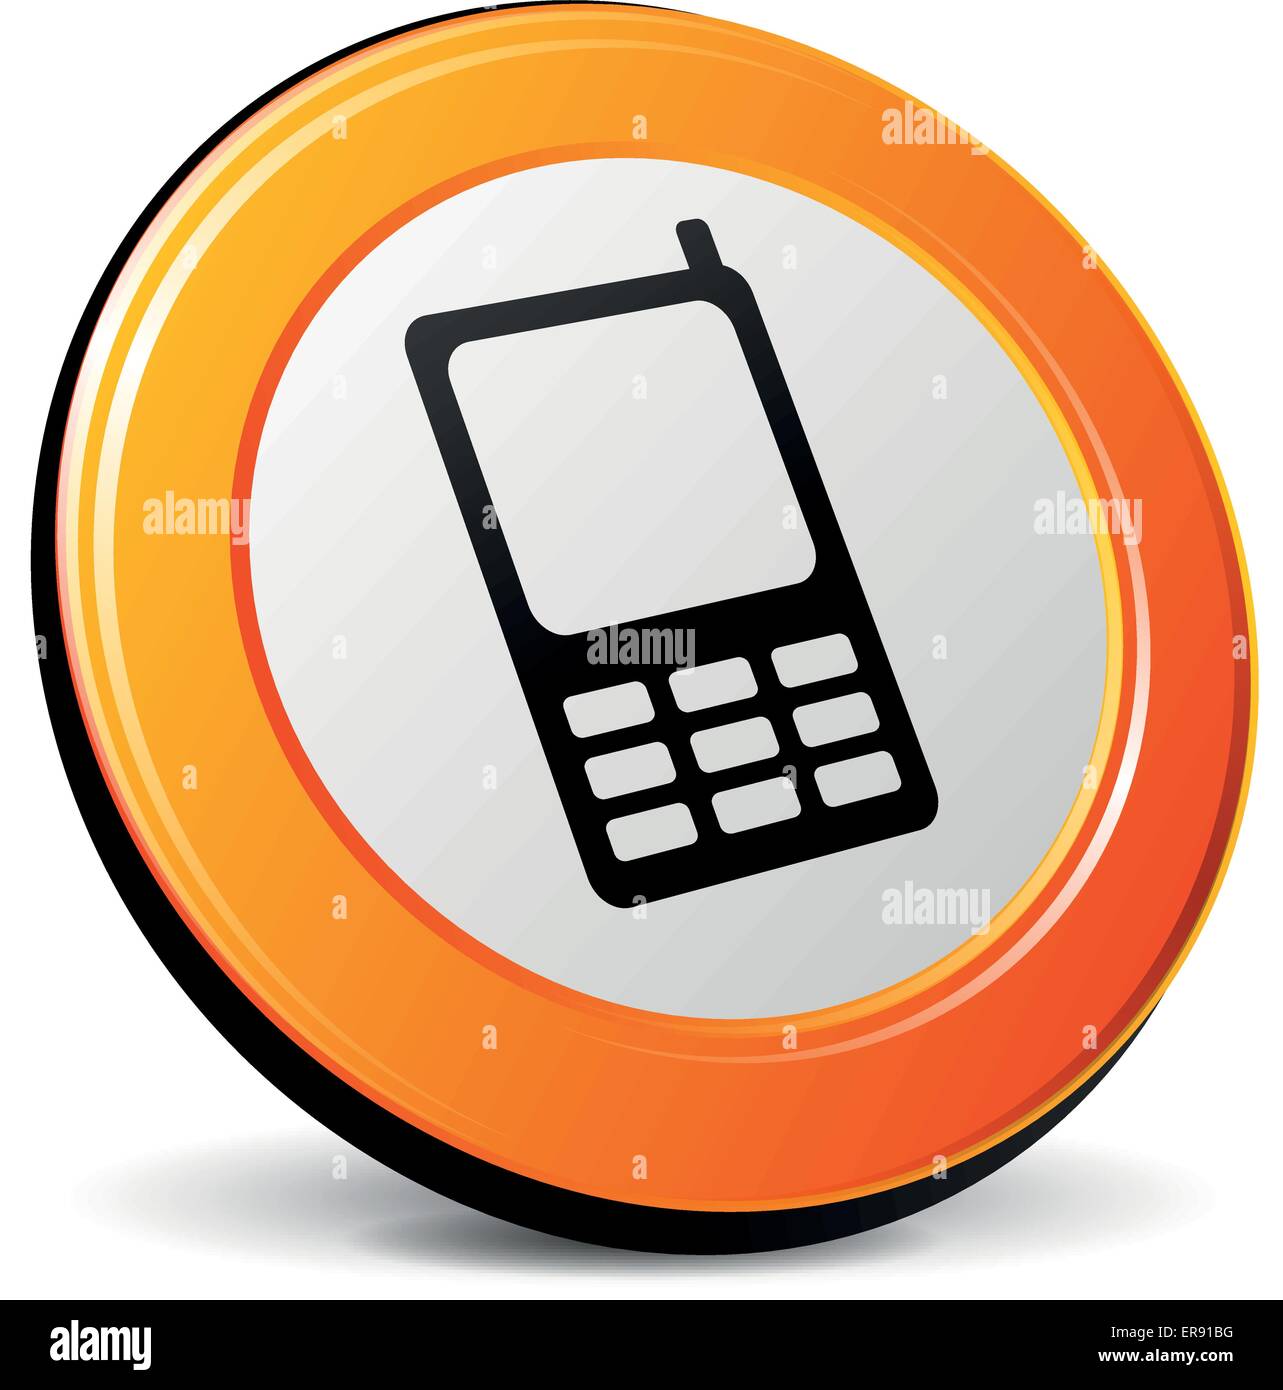 Vector illustration of orange 3d mobile phone icon Stock Vector